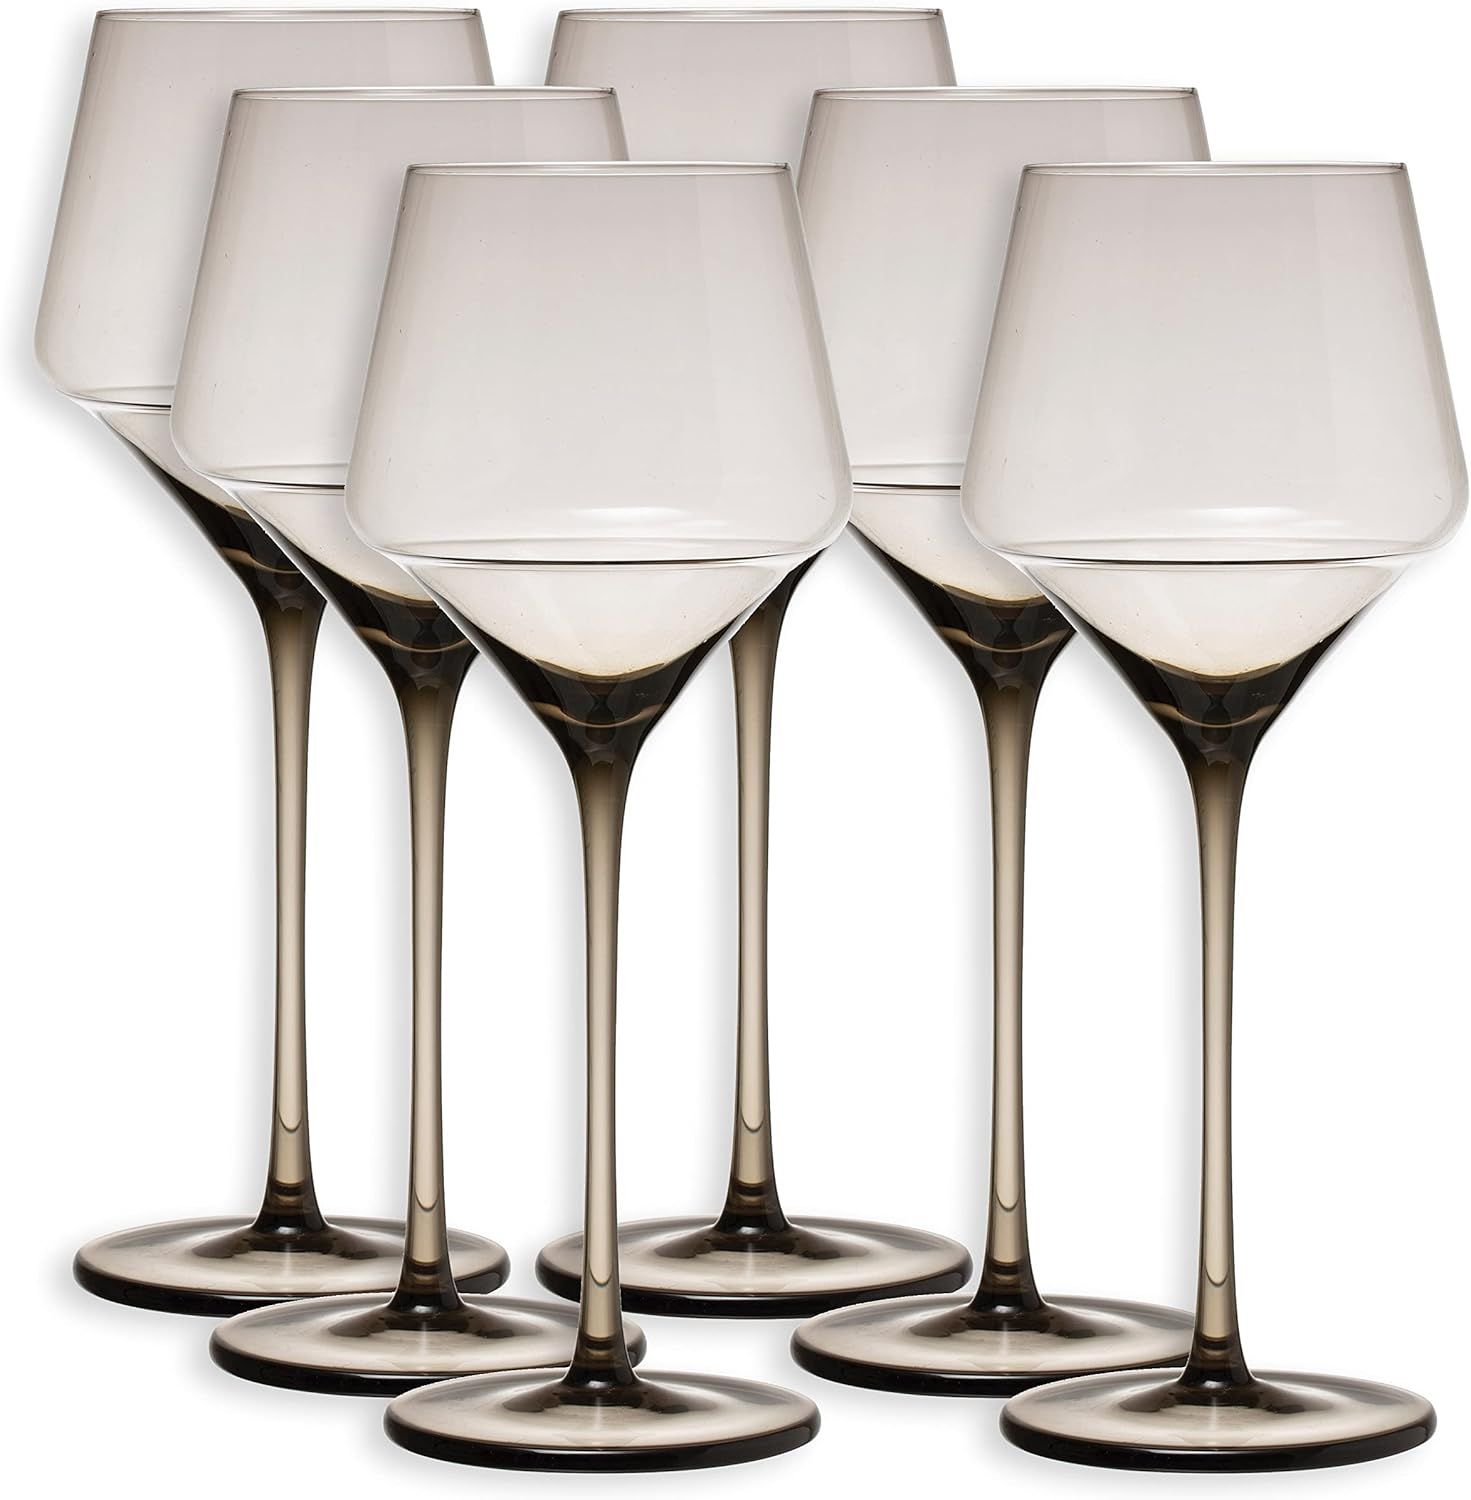 Bloomingville Long Stem Wine Glass Set with Smokey Grey Clear Glass Finish, Set of 6, AH1946SET | Amazon (US)